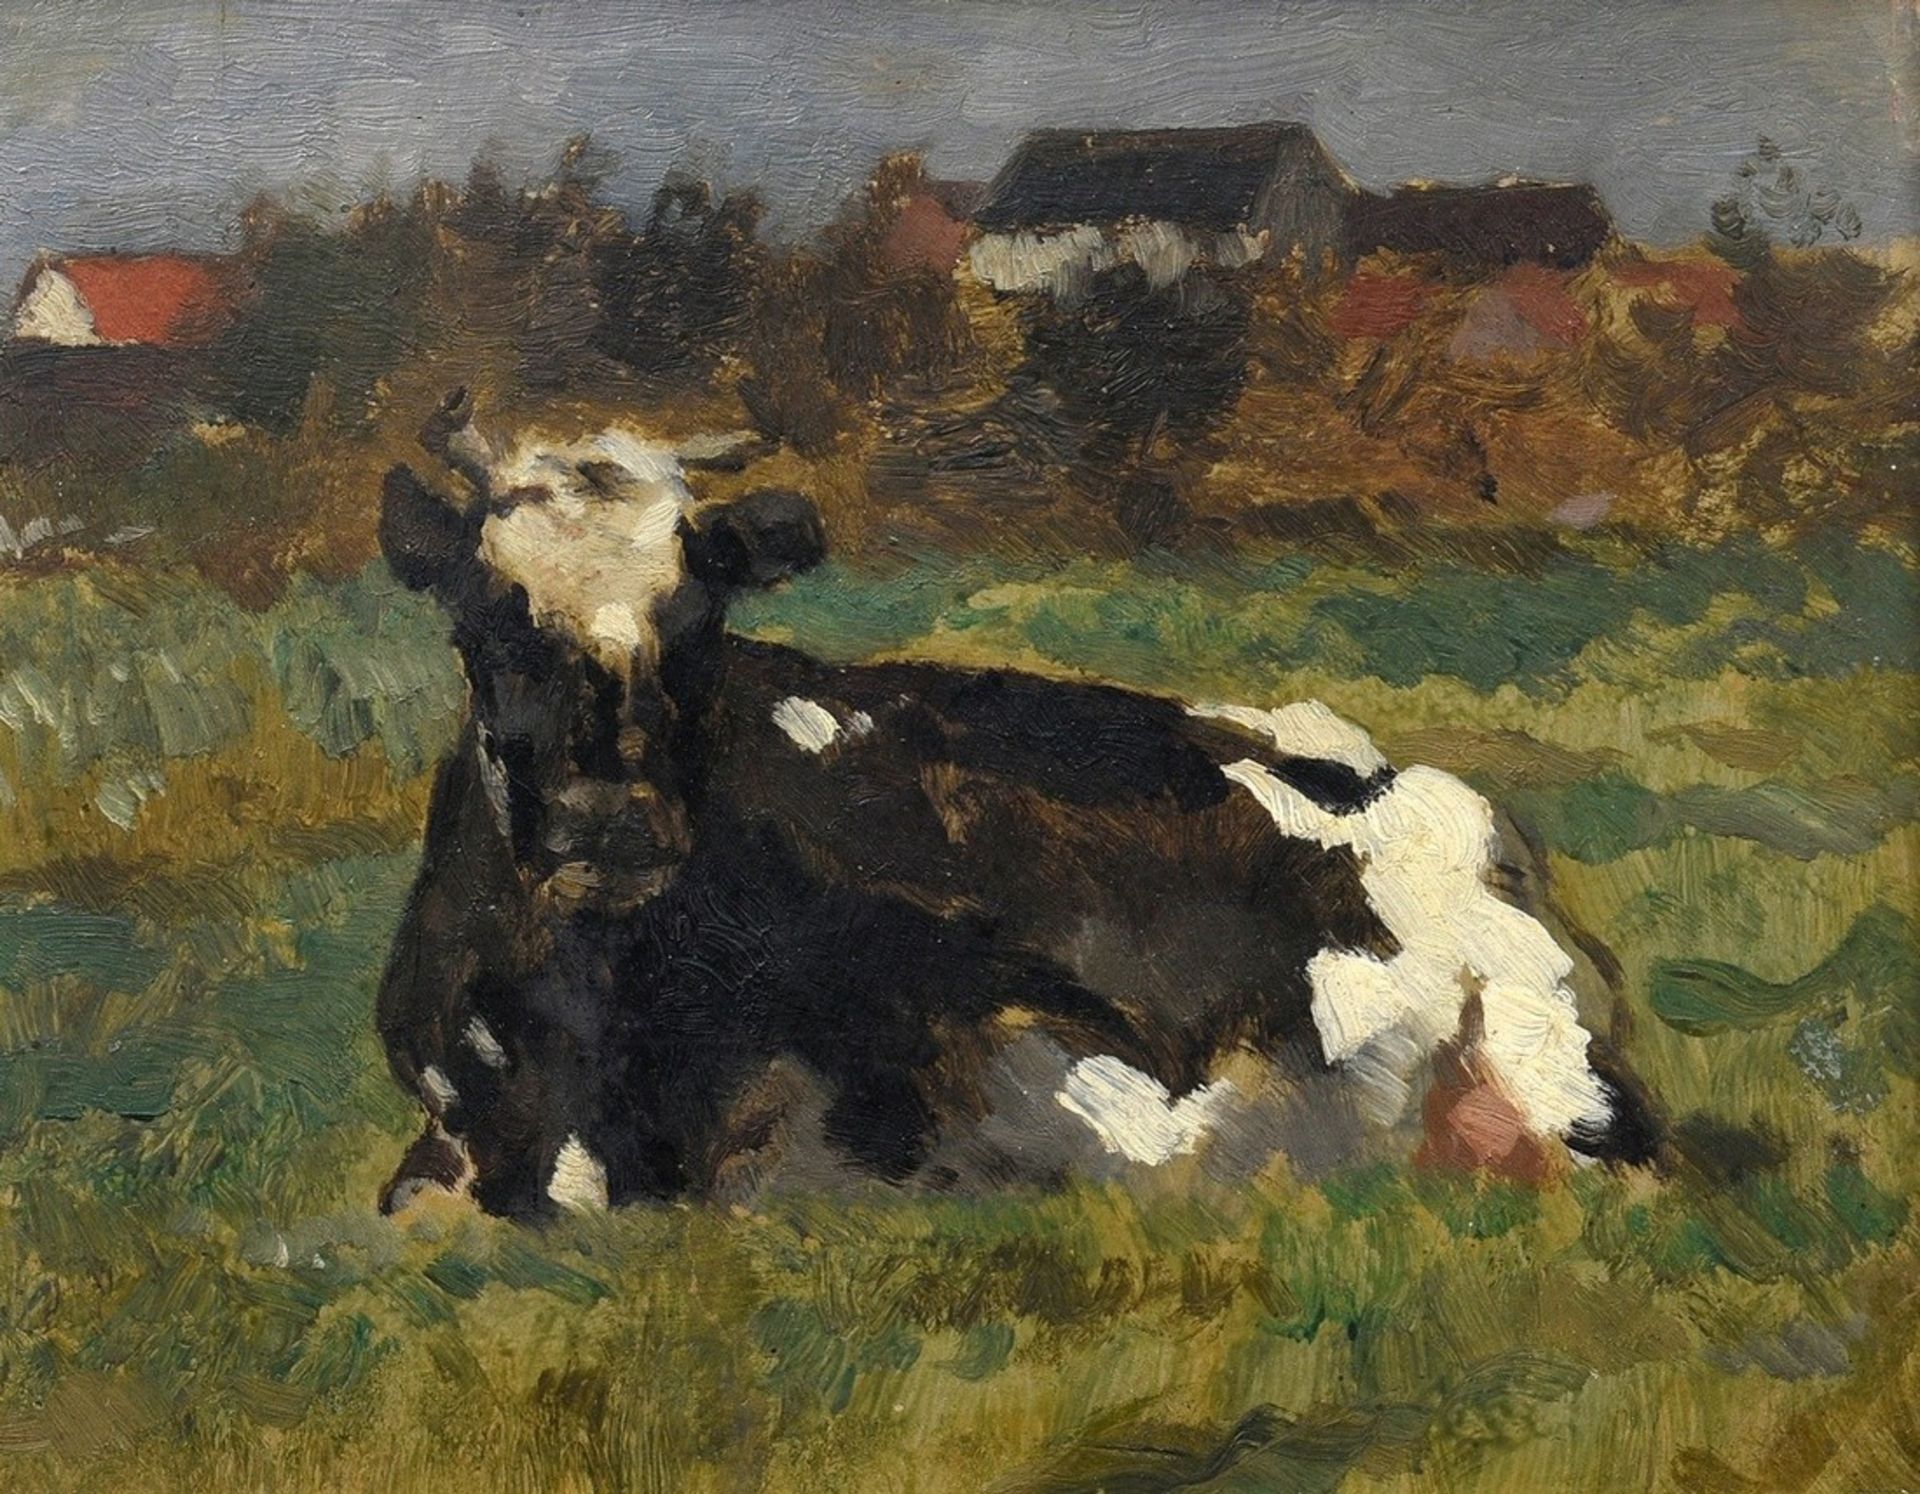 Unbekannter Künstler um 1900 „Liegende Kuh“, Öl/Holz, 16,8x20,8cm (m.R. 31x27cm)